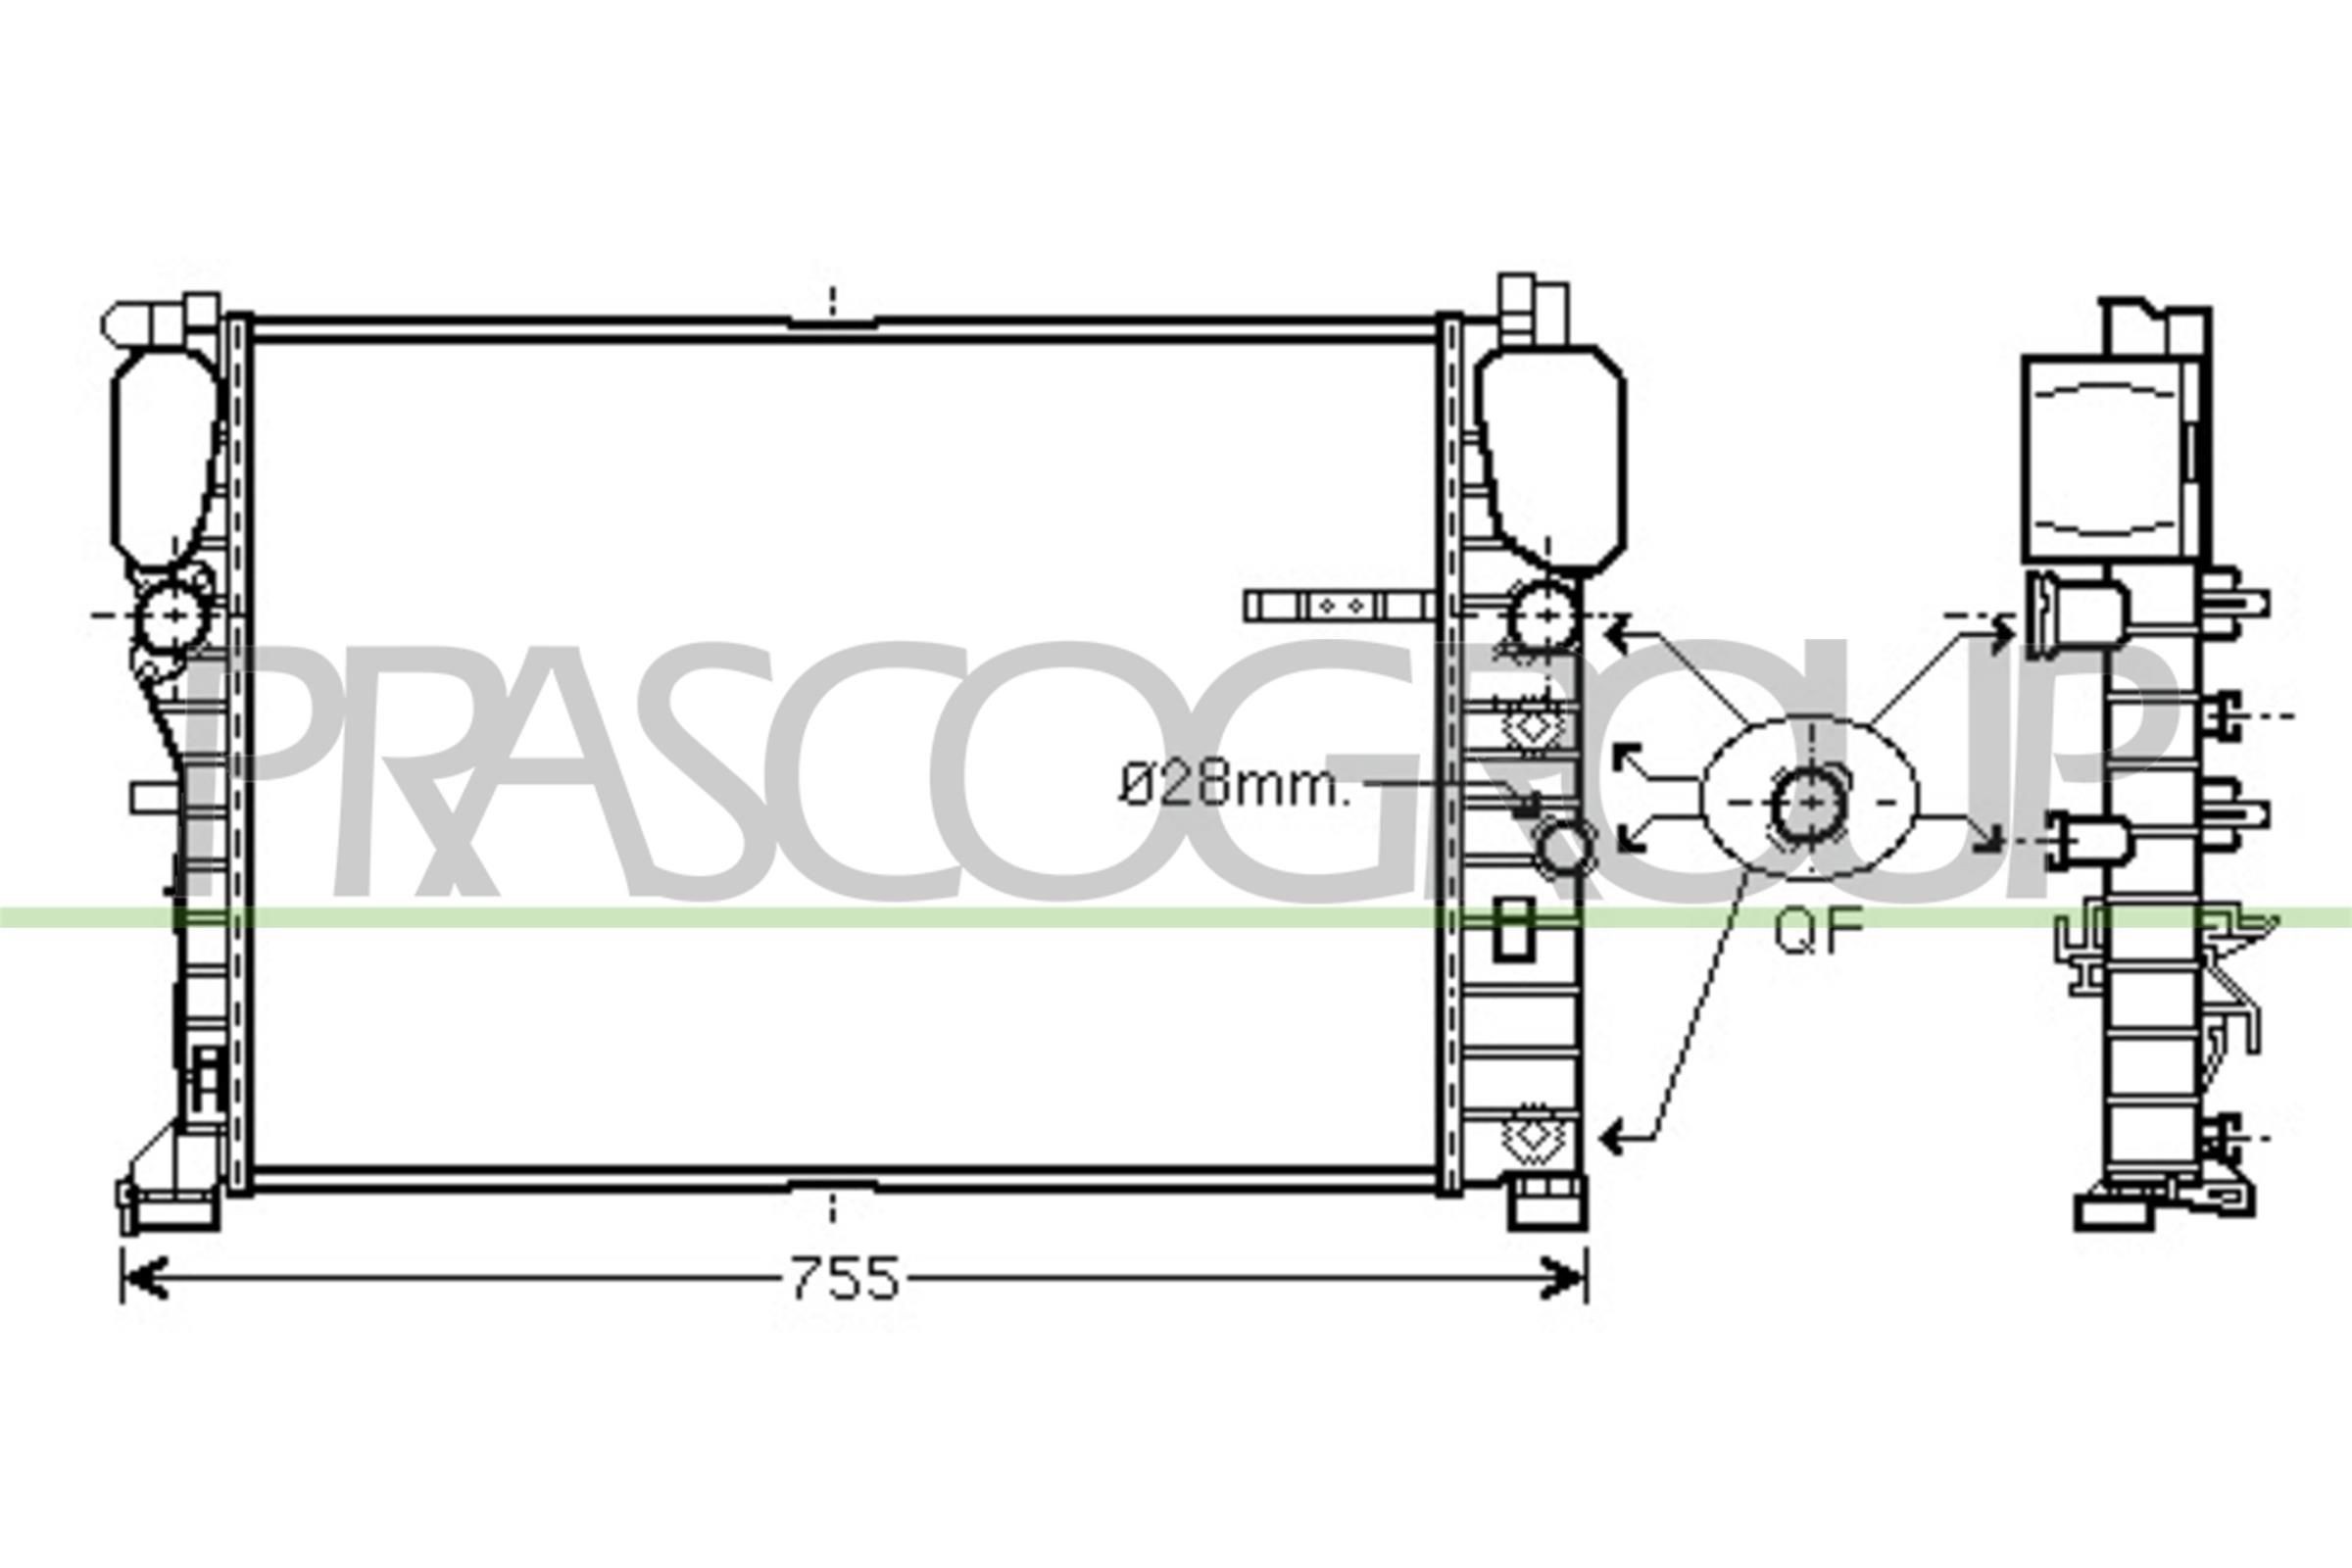 MSA2459 PRASCO Aluminium, 640 x 462 x 42 mm, with quick couplers, Brazed cooling fins Radiator ME039R005 buy